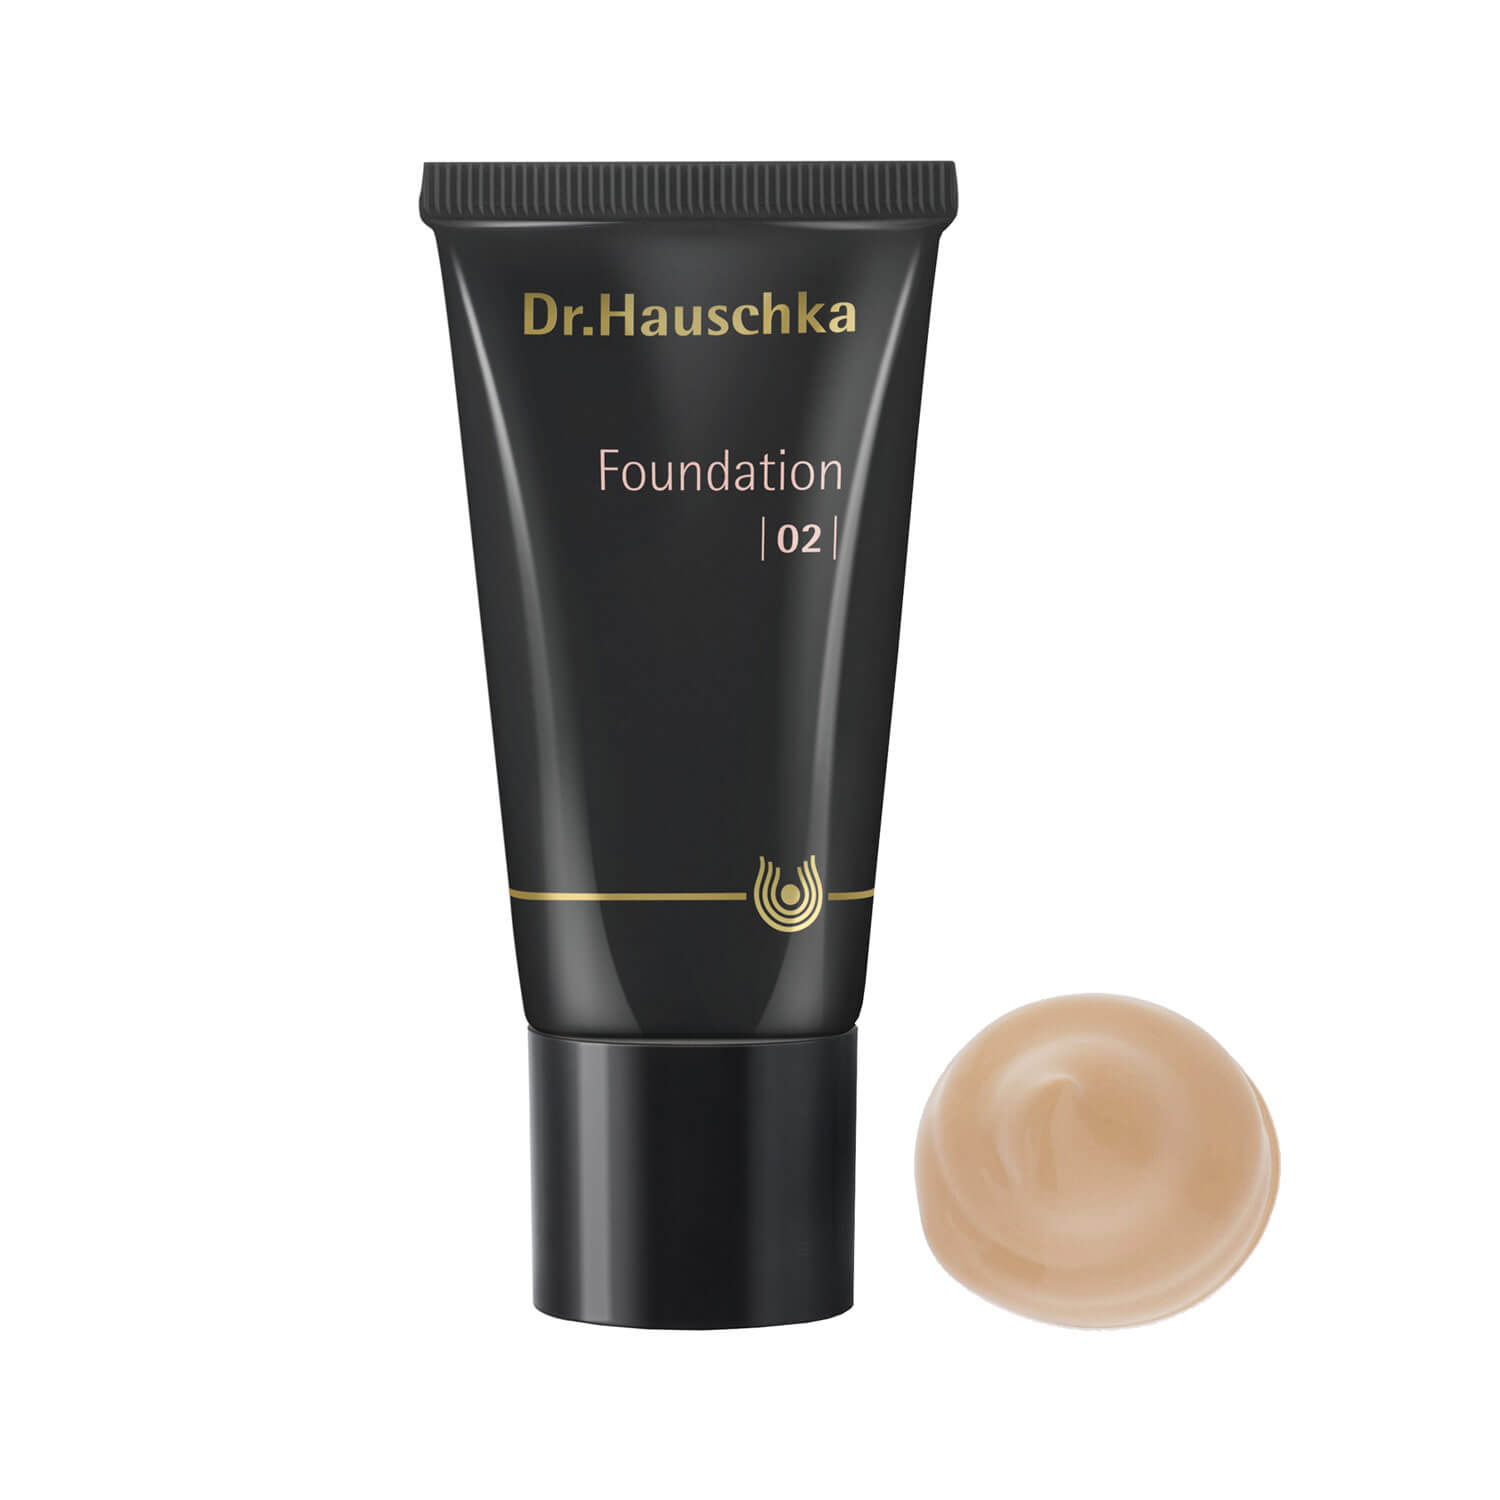 Dr. Hauschka Foundation - Almond